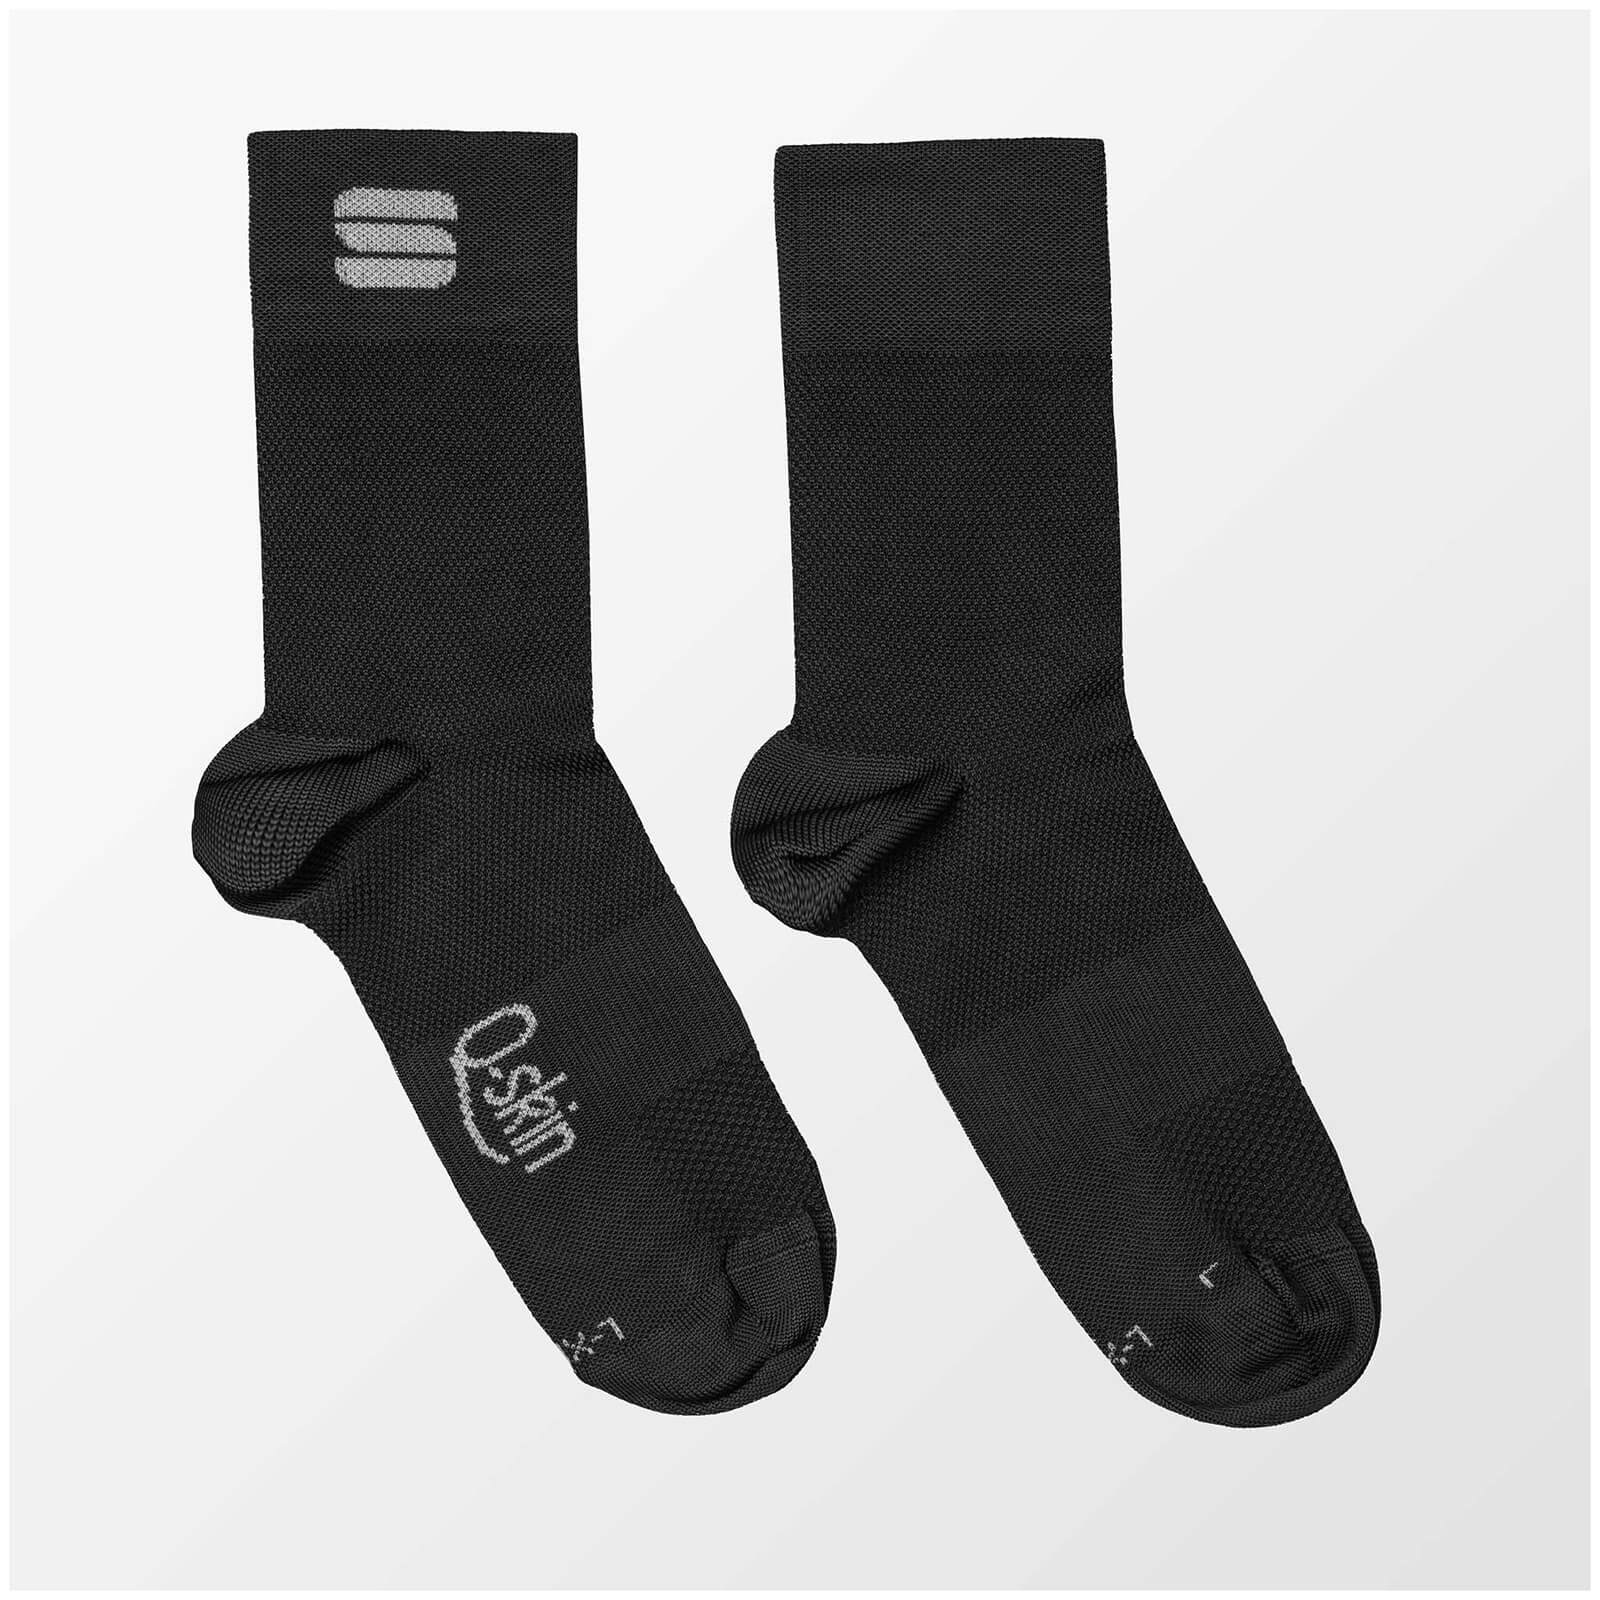 Sportful Women's Matchy Socks - S/M